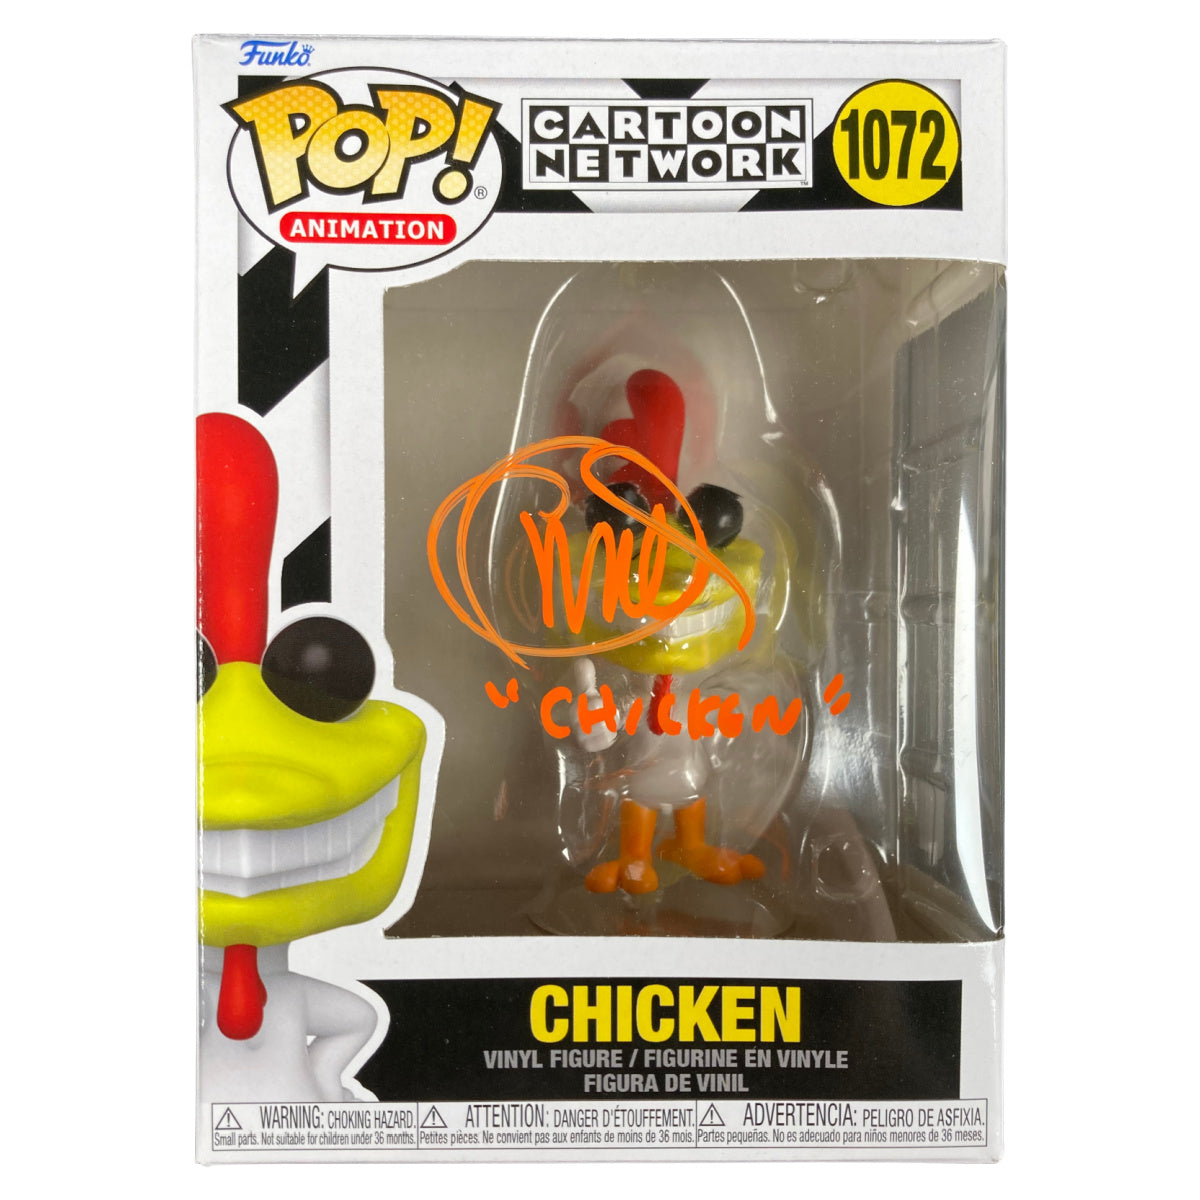 Charlie Adler Signed Funko POP Cartoon Network Chicken #1072 Autographed JSA COA